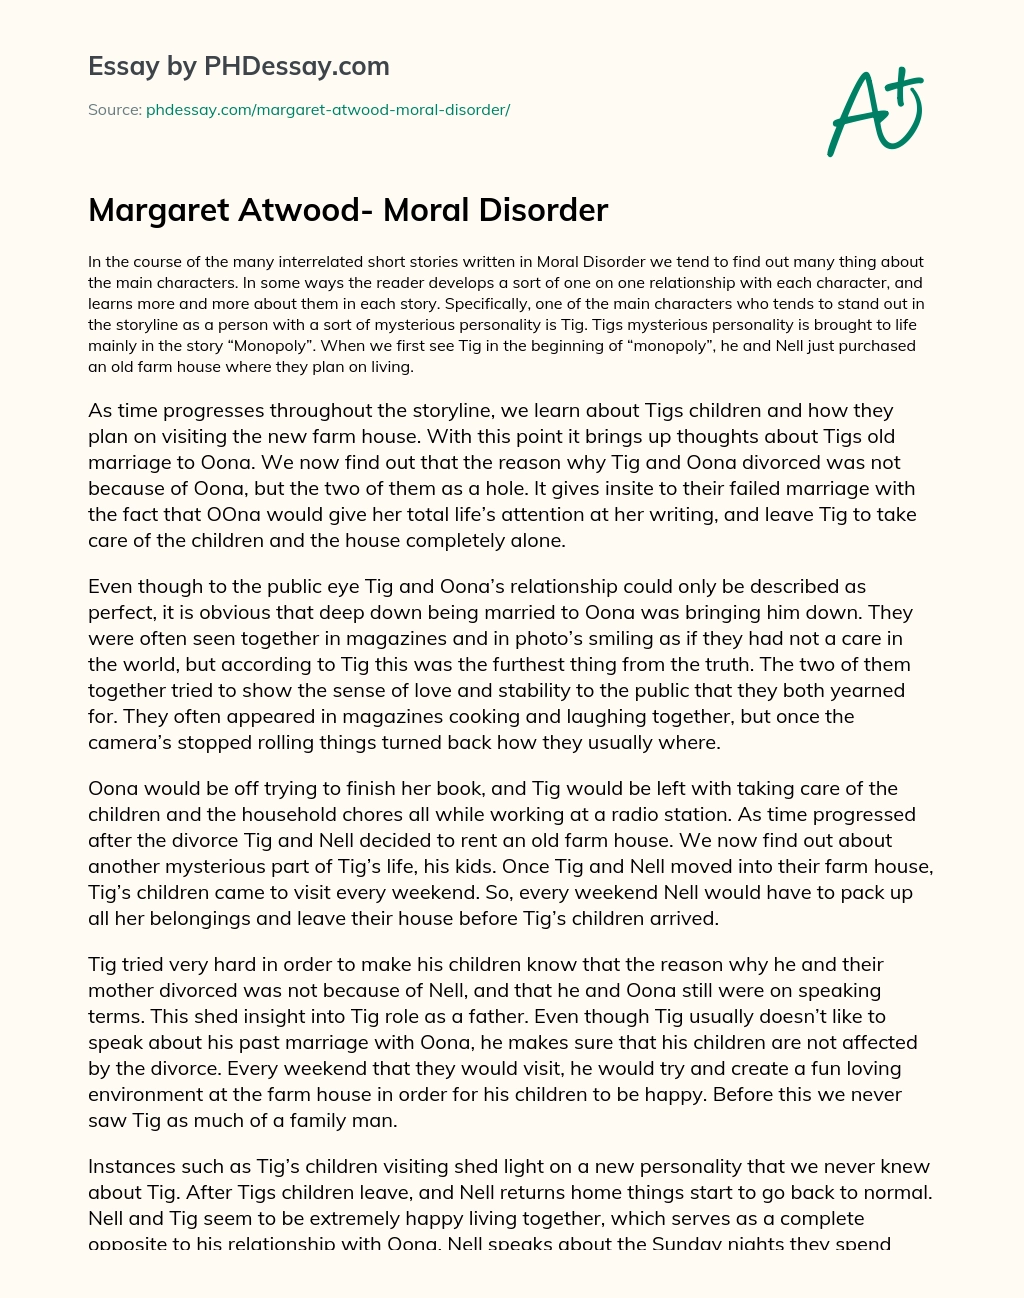 Margaret Atwood- Moral Disorder essay